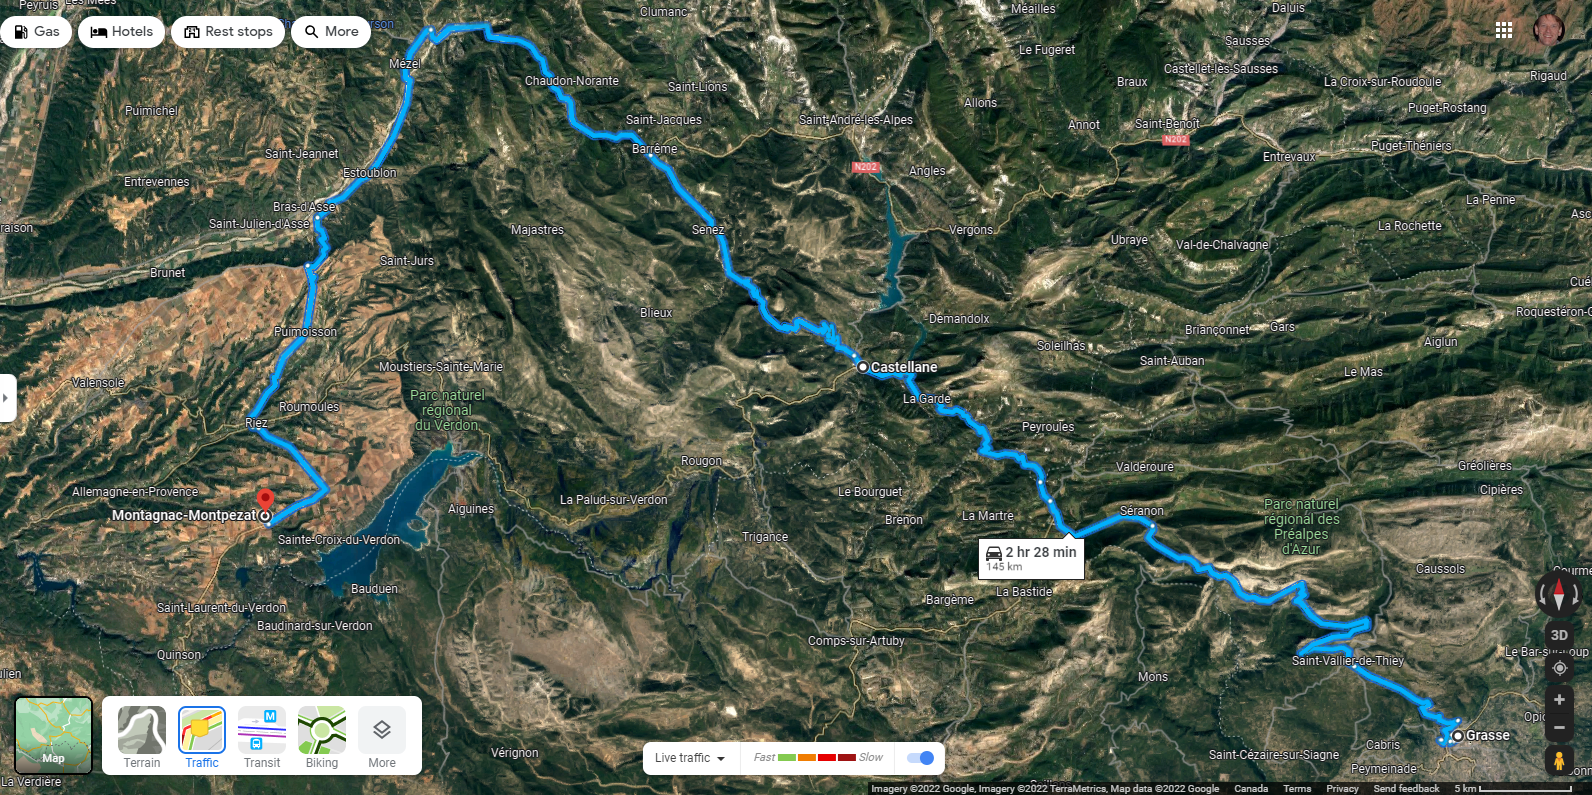 Napoleon Route on Google Earth